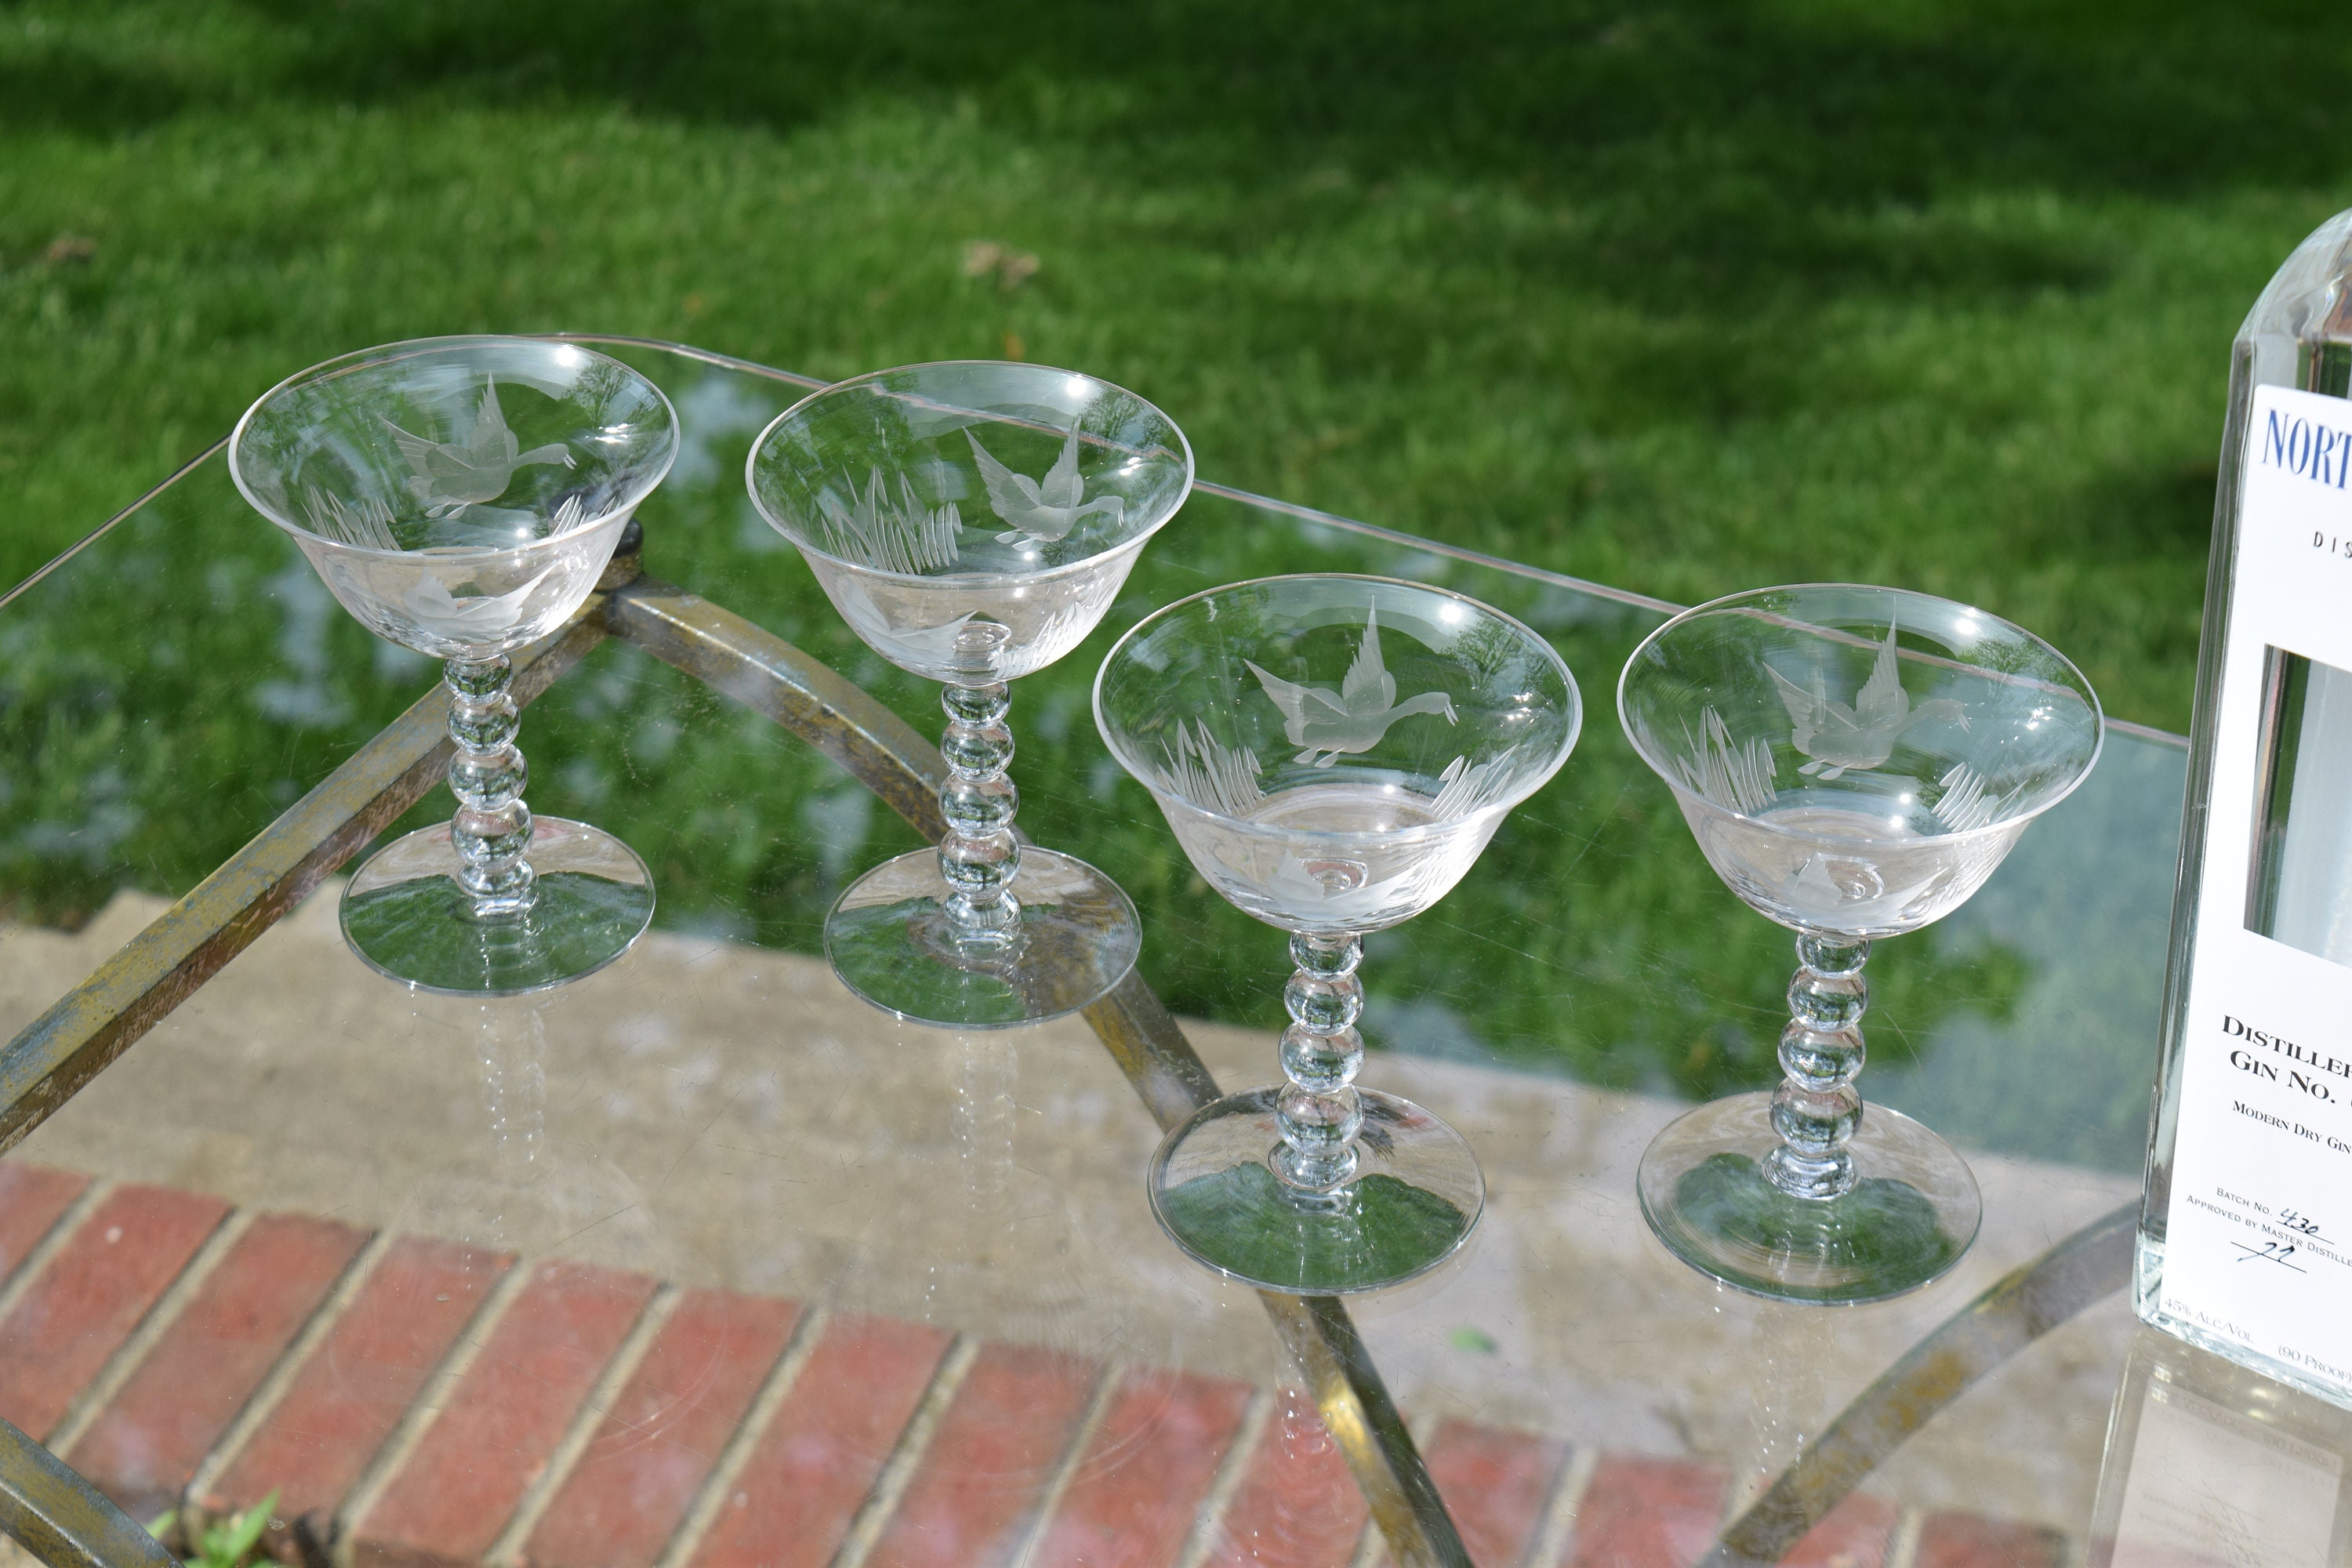 6 Vintage Cocktail - Martini Glasses, Candlewick, circa 1950's